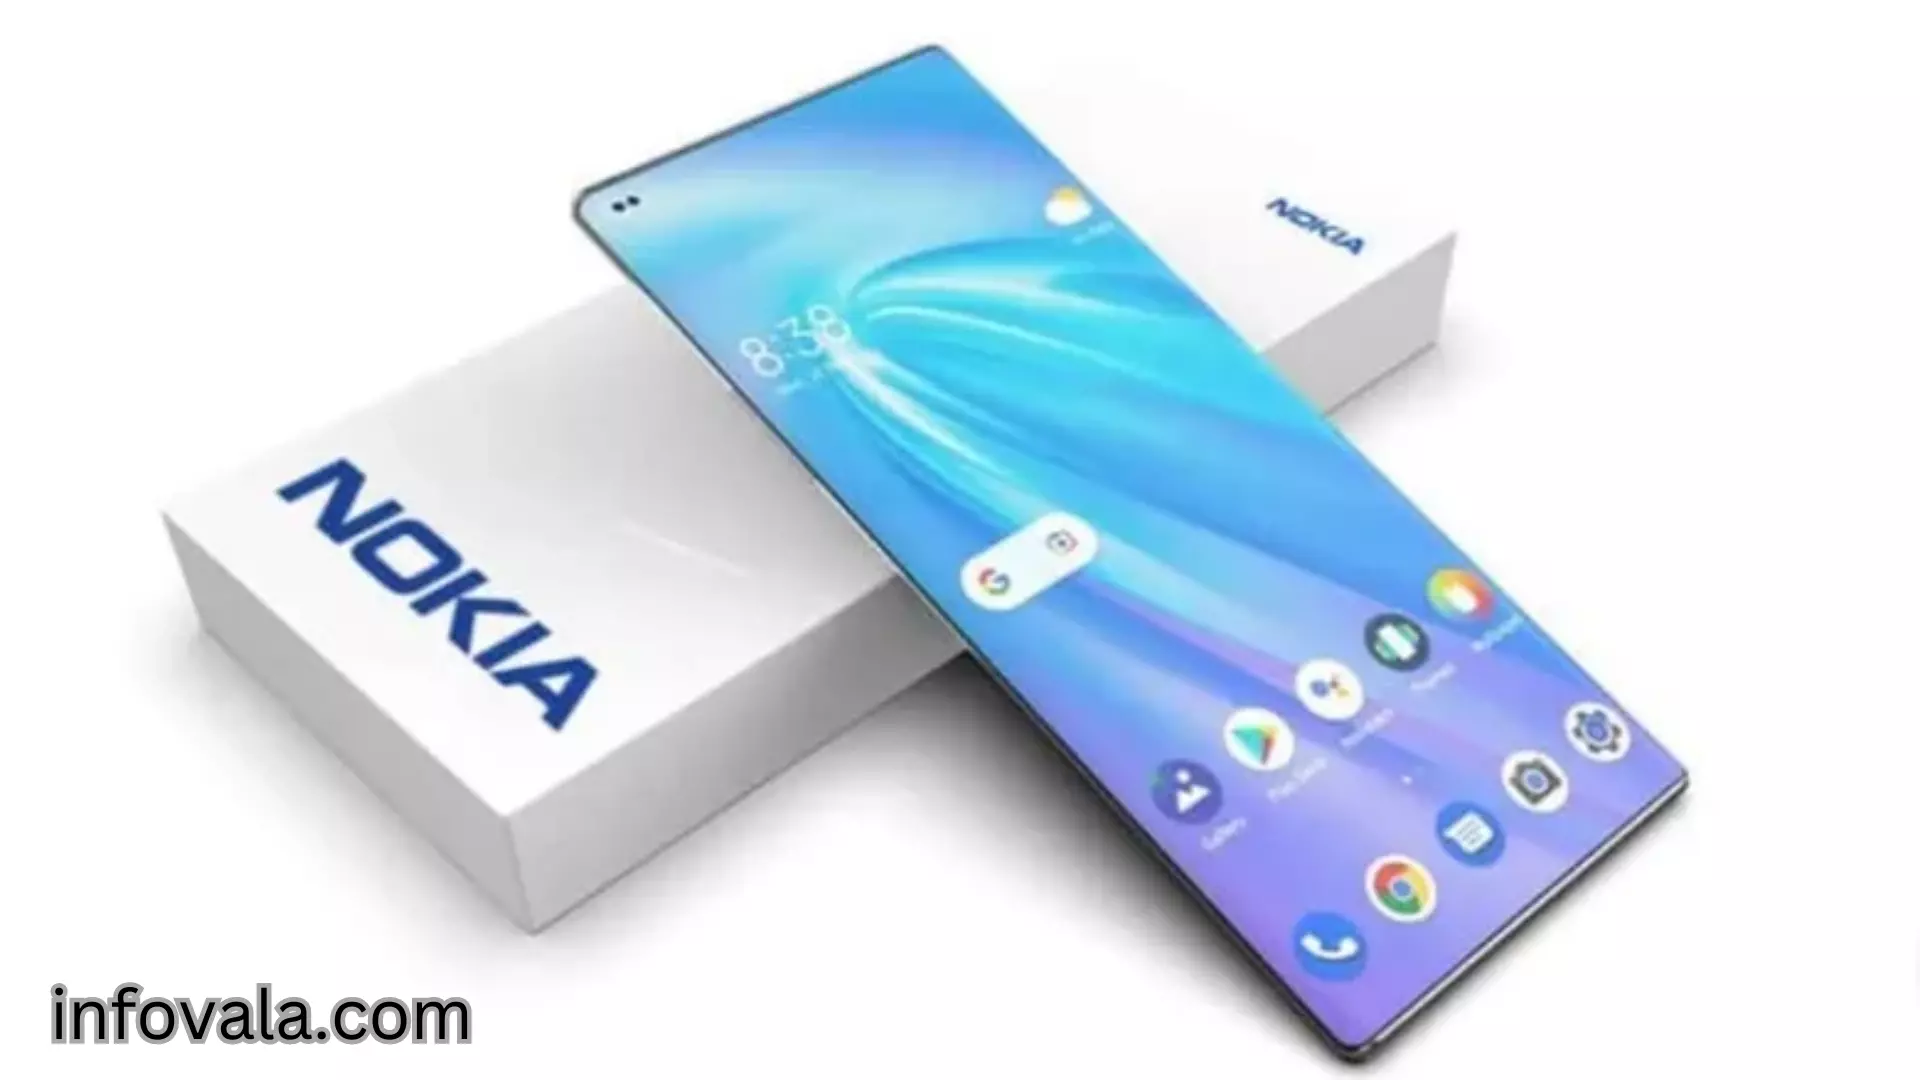 Nokia Swan Ultra